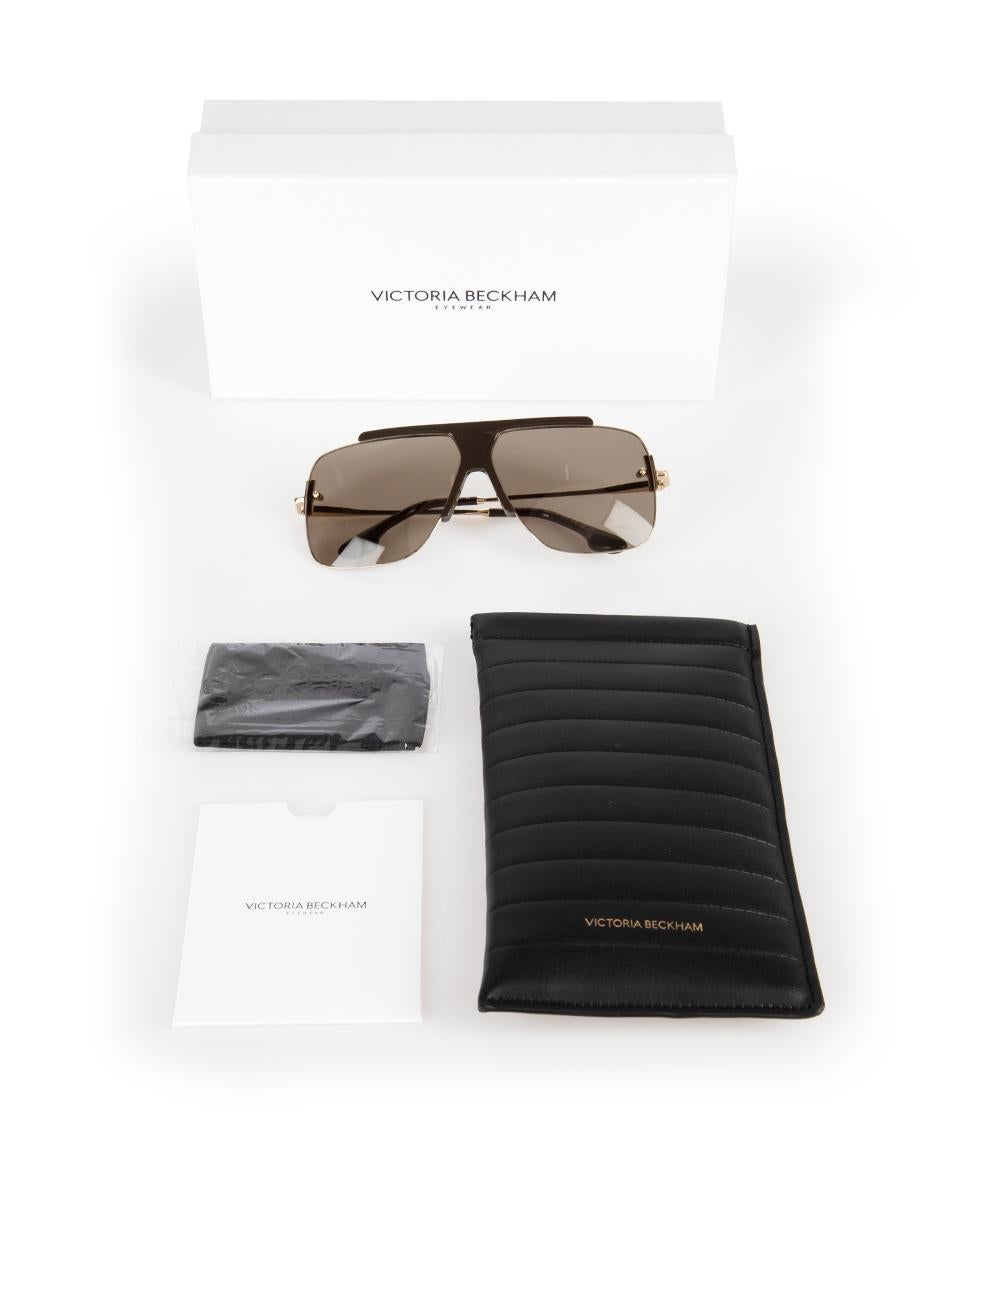 Victoria Beckham Mocha Navigator Sunglasses For Sale 4